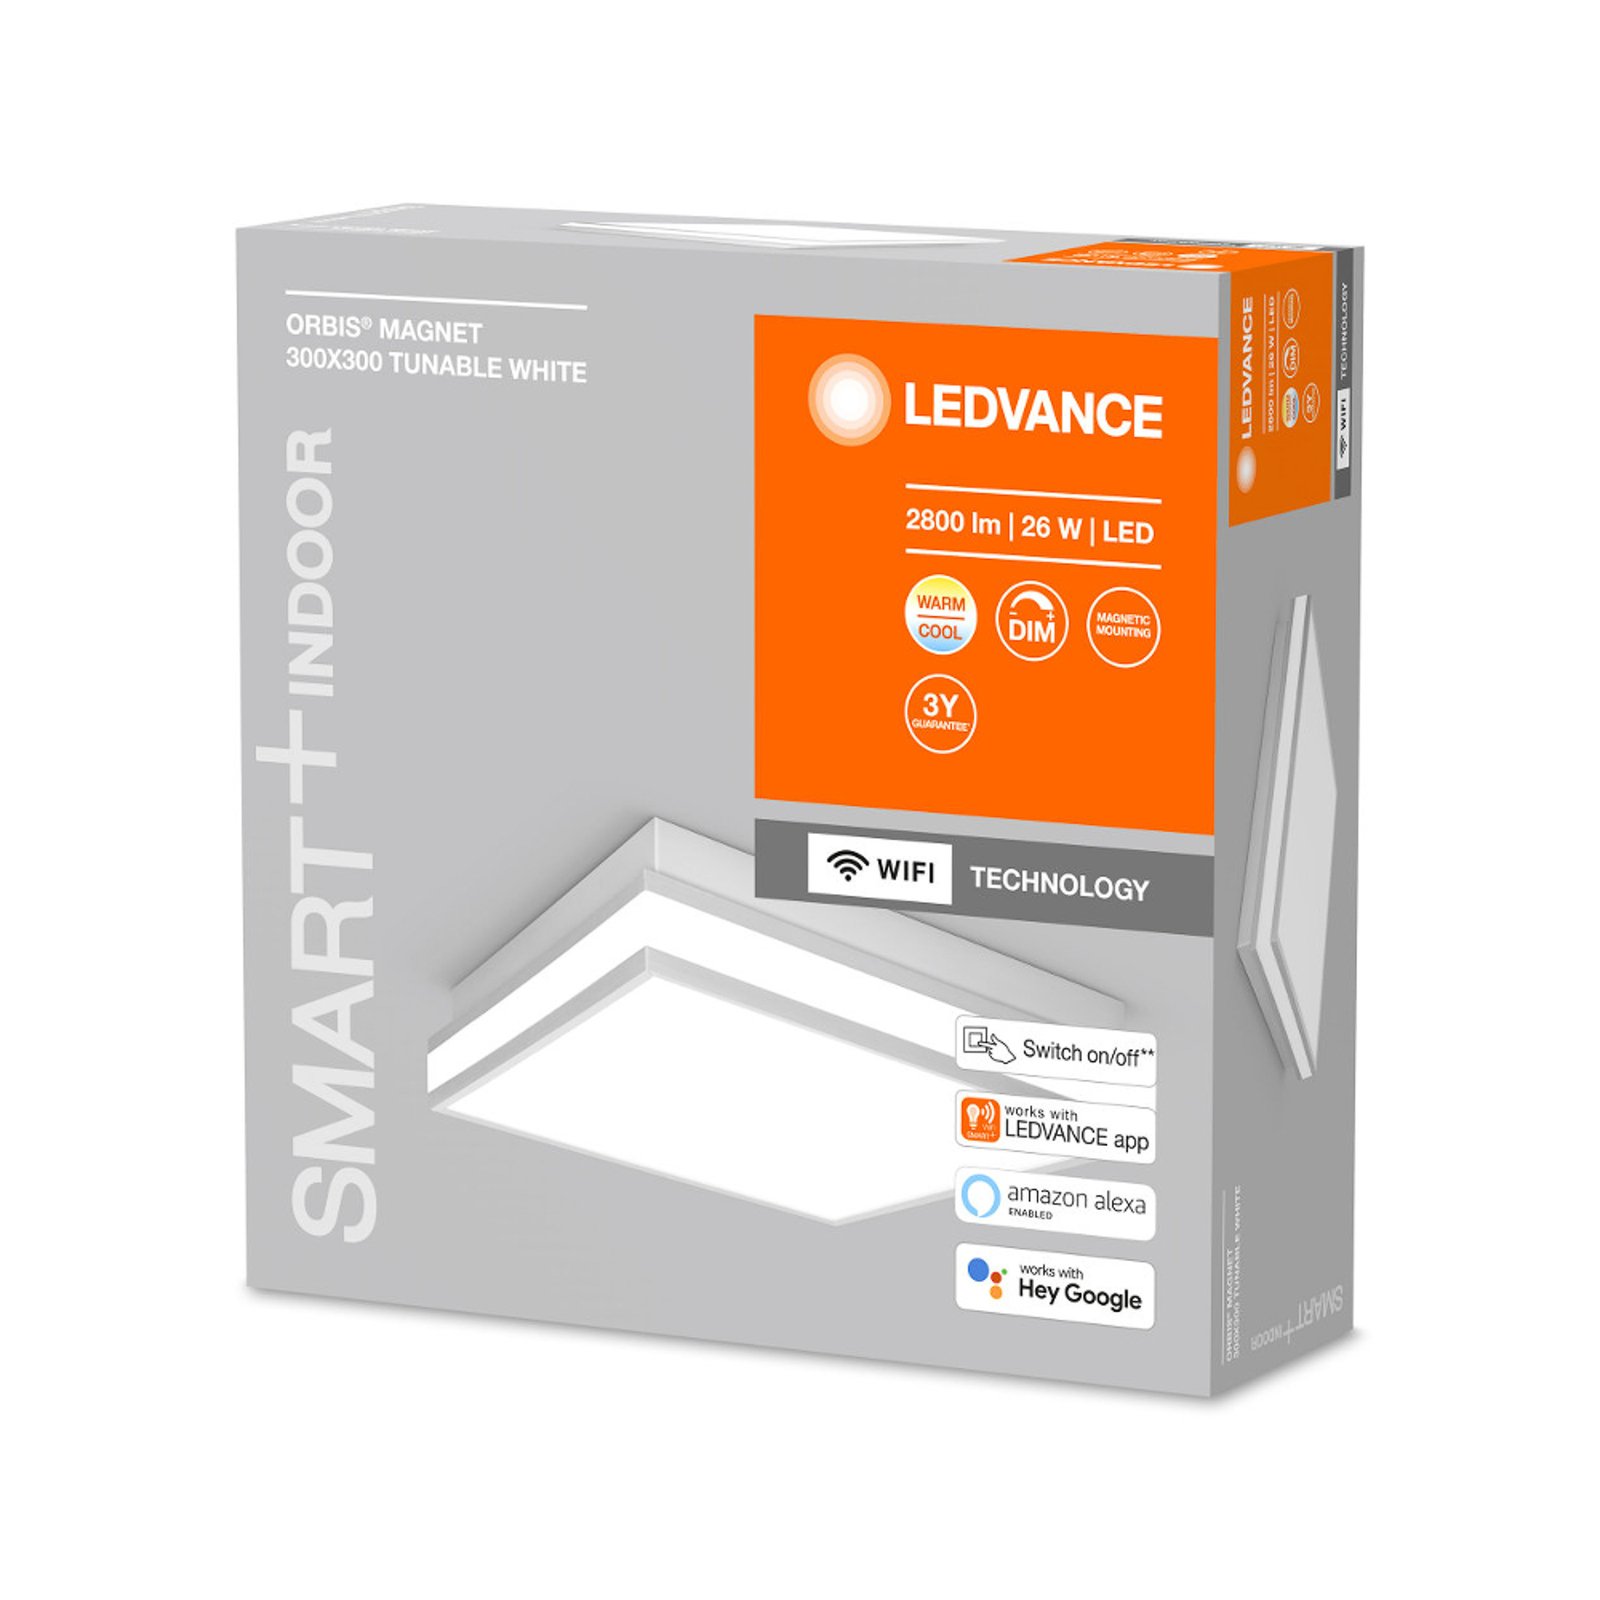 LEDVANCE SMART+ WiFi Orbis Magnet cinzento, 30x30cm